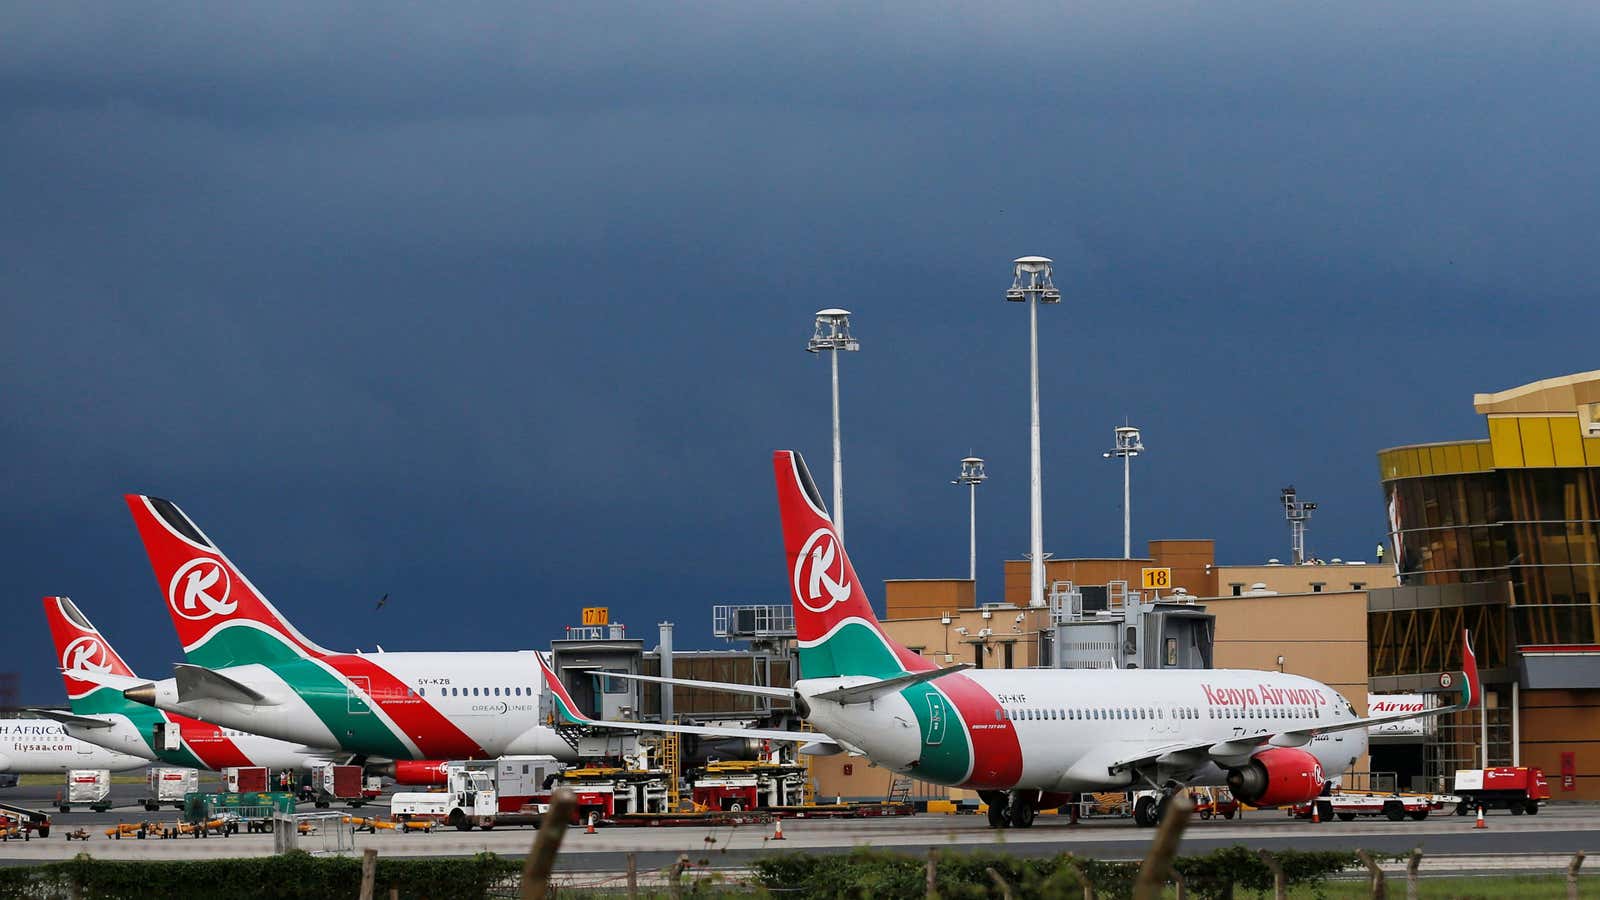 Fly into Jomo Kenyatta International Airport. Many are.